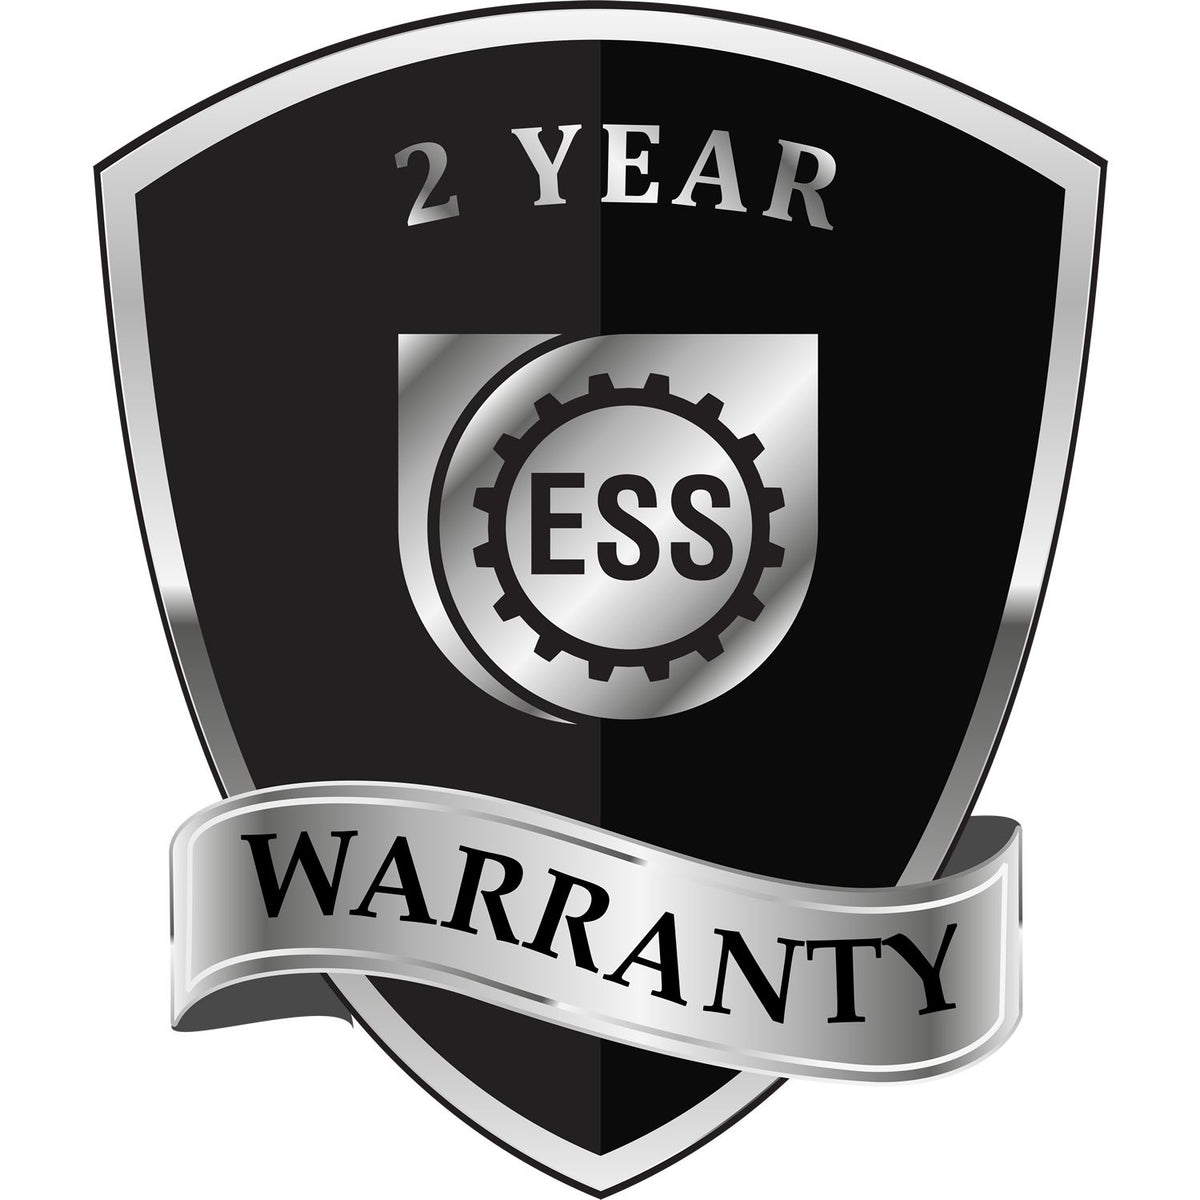 A badge or emblem showing a warranty icon for the Long Reach Arkansas Land Surveyor Seal